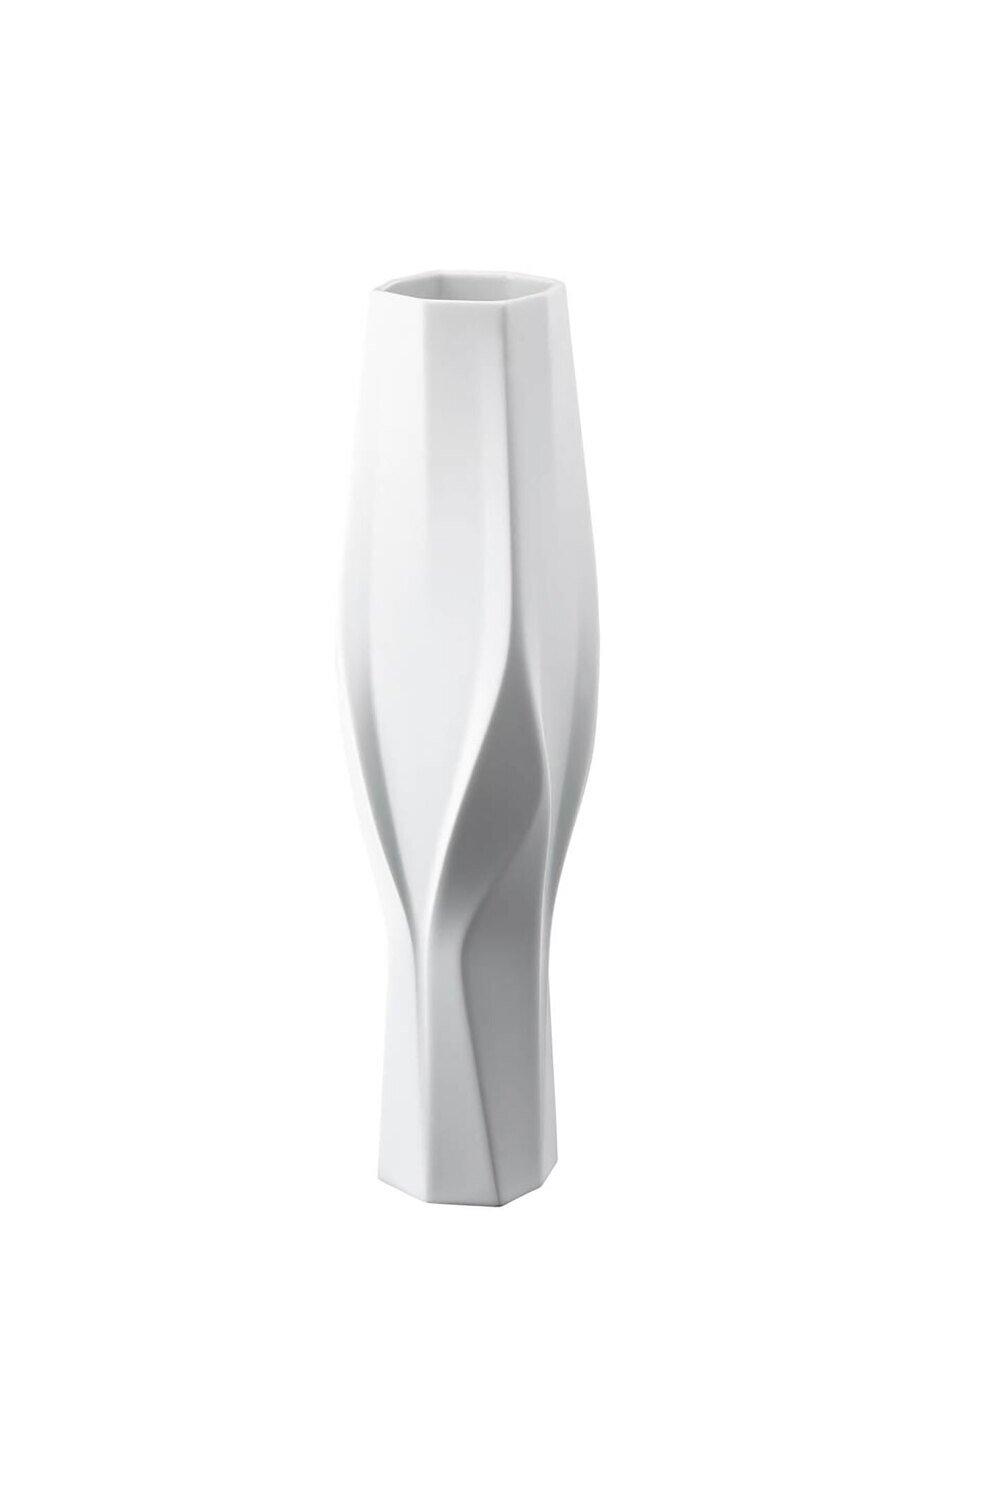 Rosenthal Weave White- Zaha Hadid Vase 17 3/4 Inchch